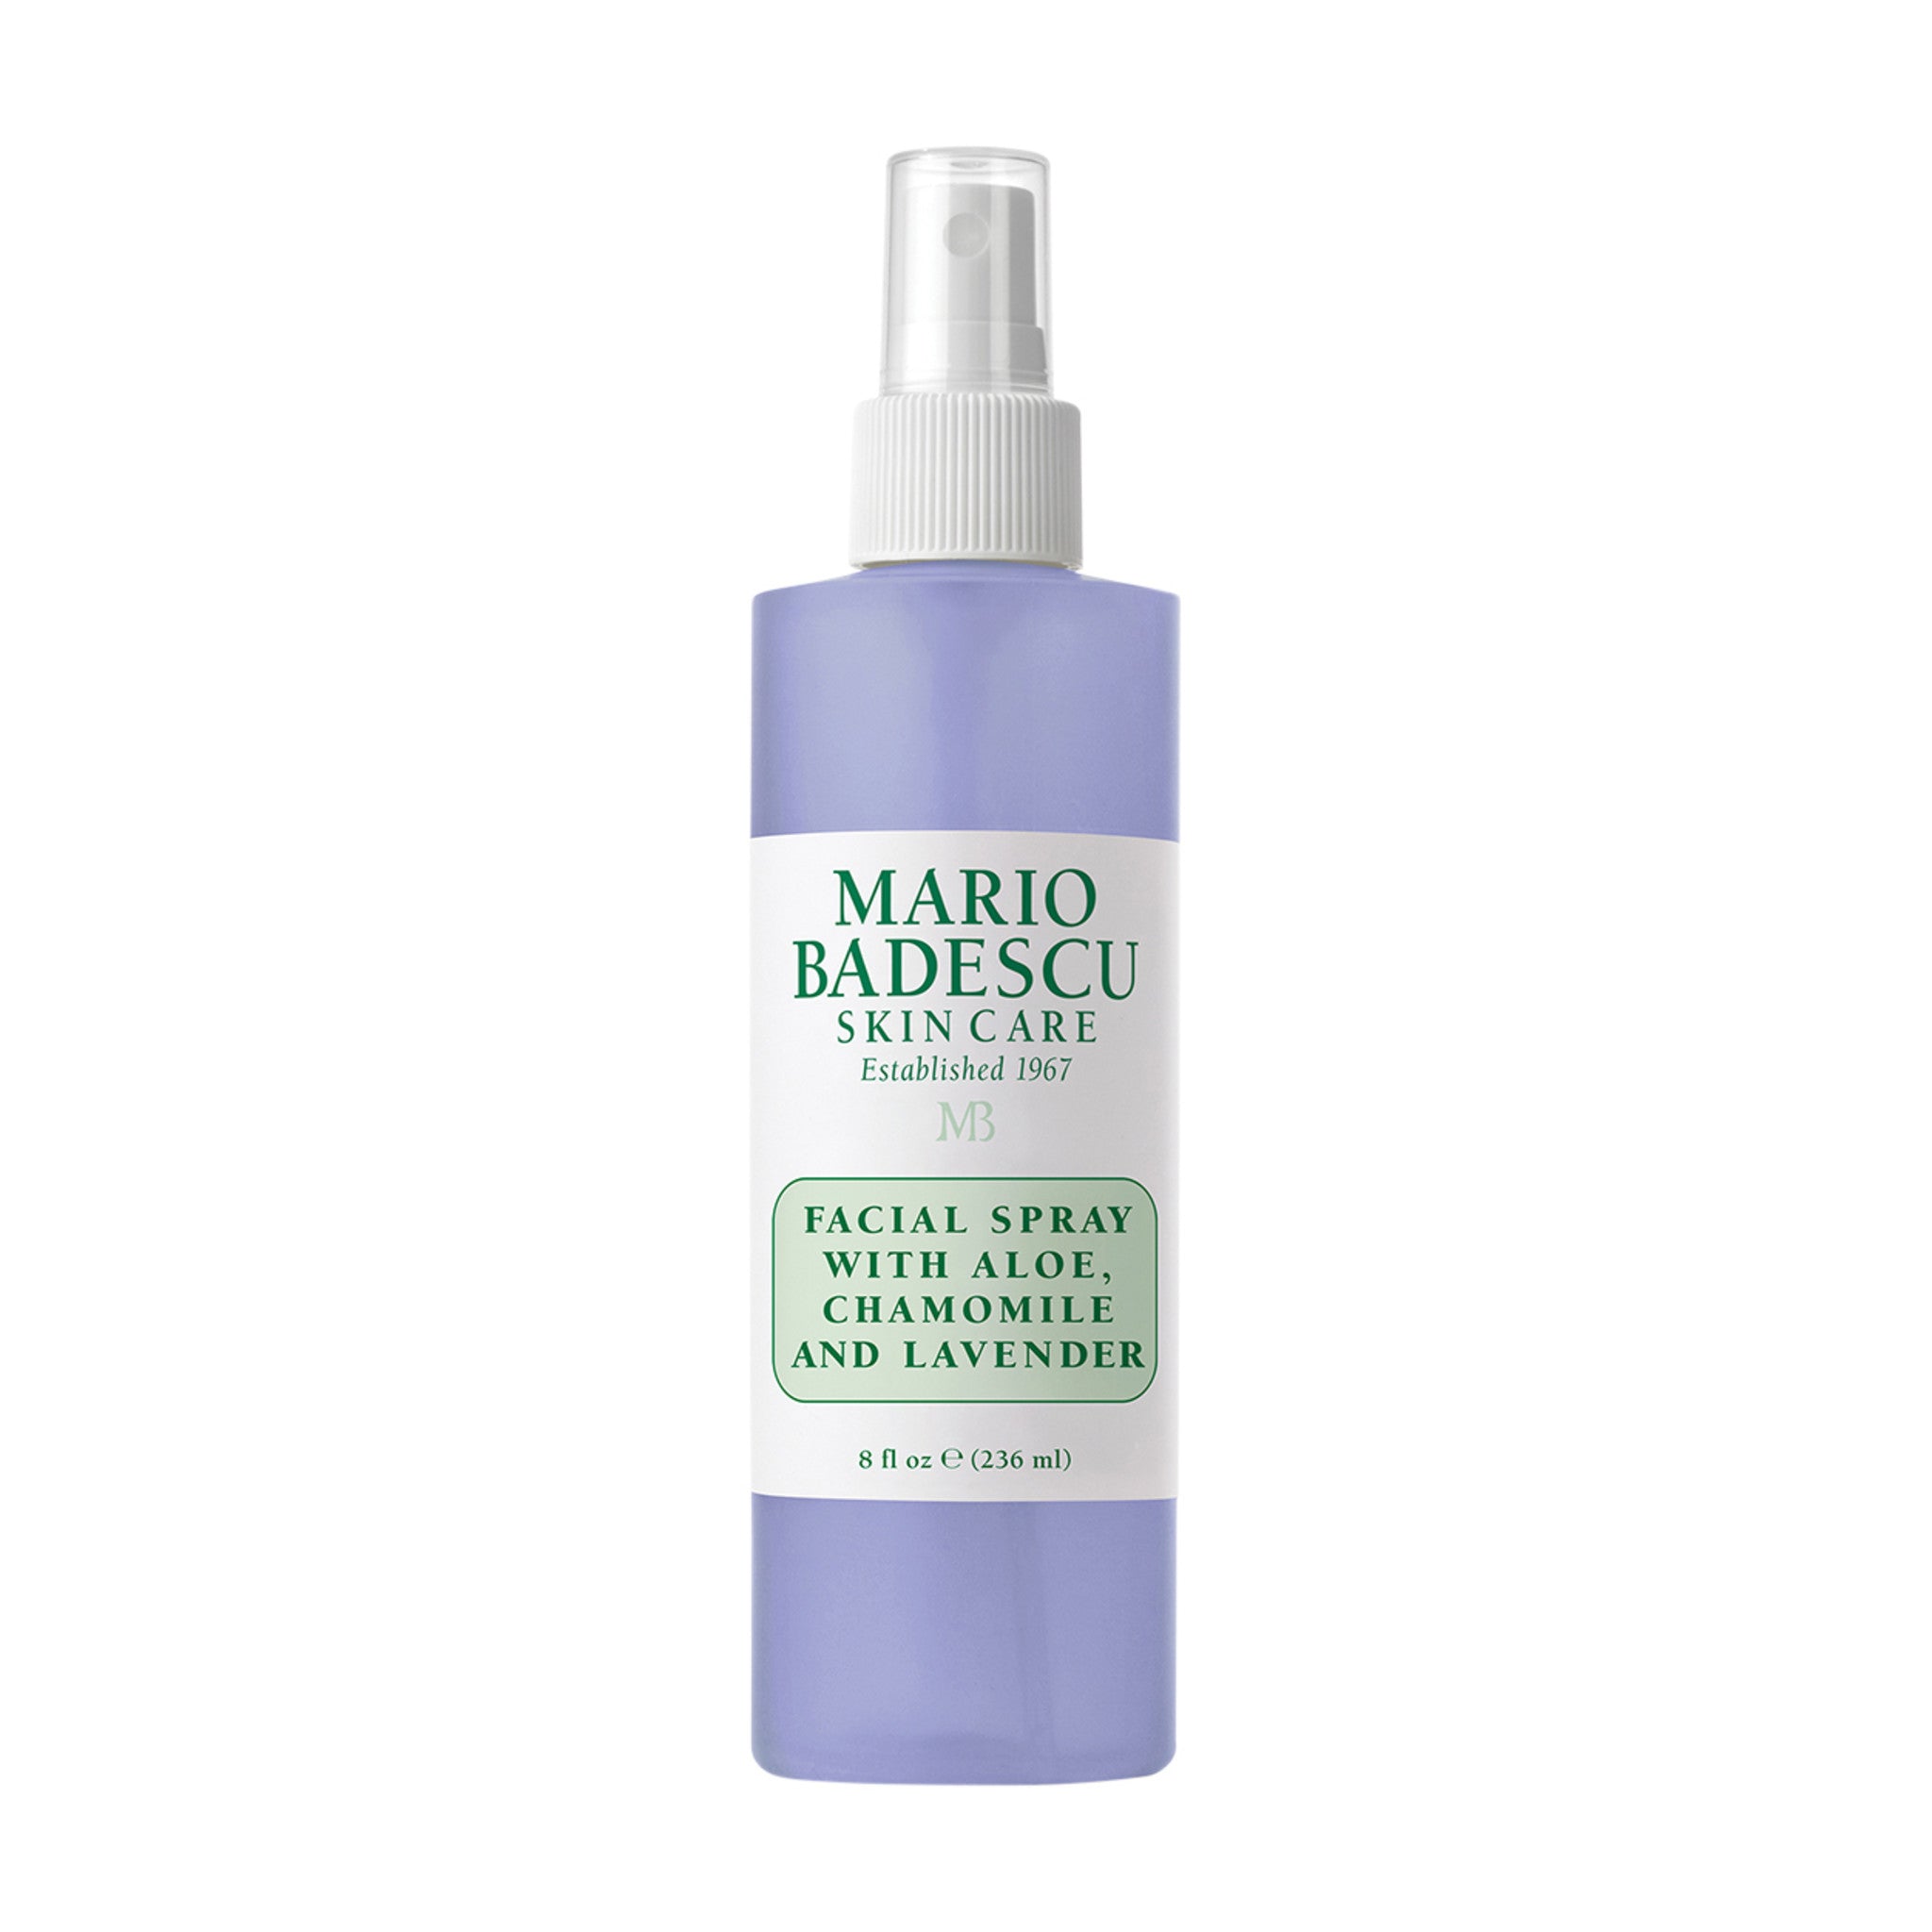 Mario Badescu Facial Spray With Aloe, Chamomile and Lavender Size variant: 8 oz main image.